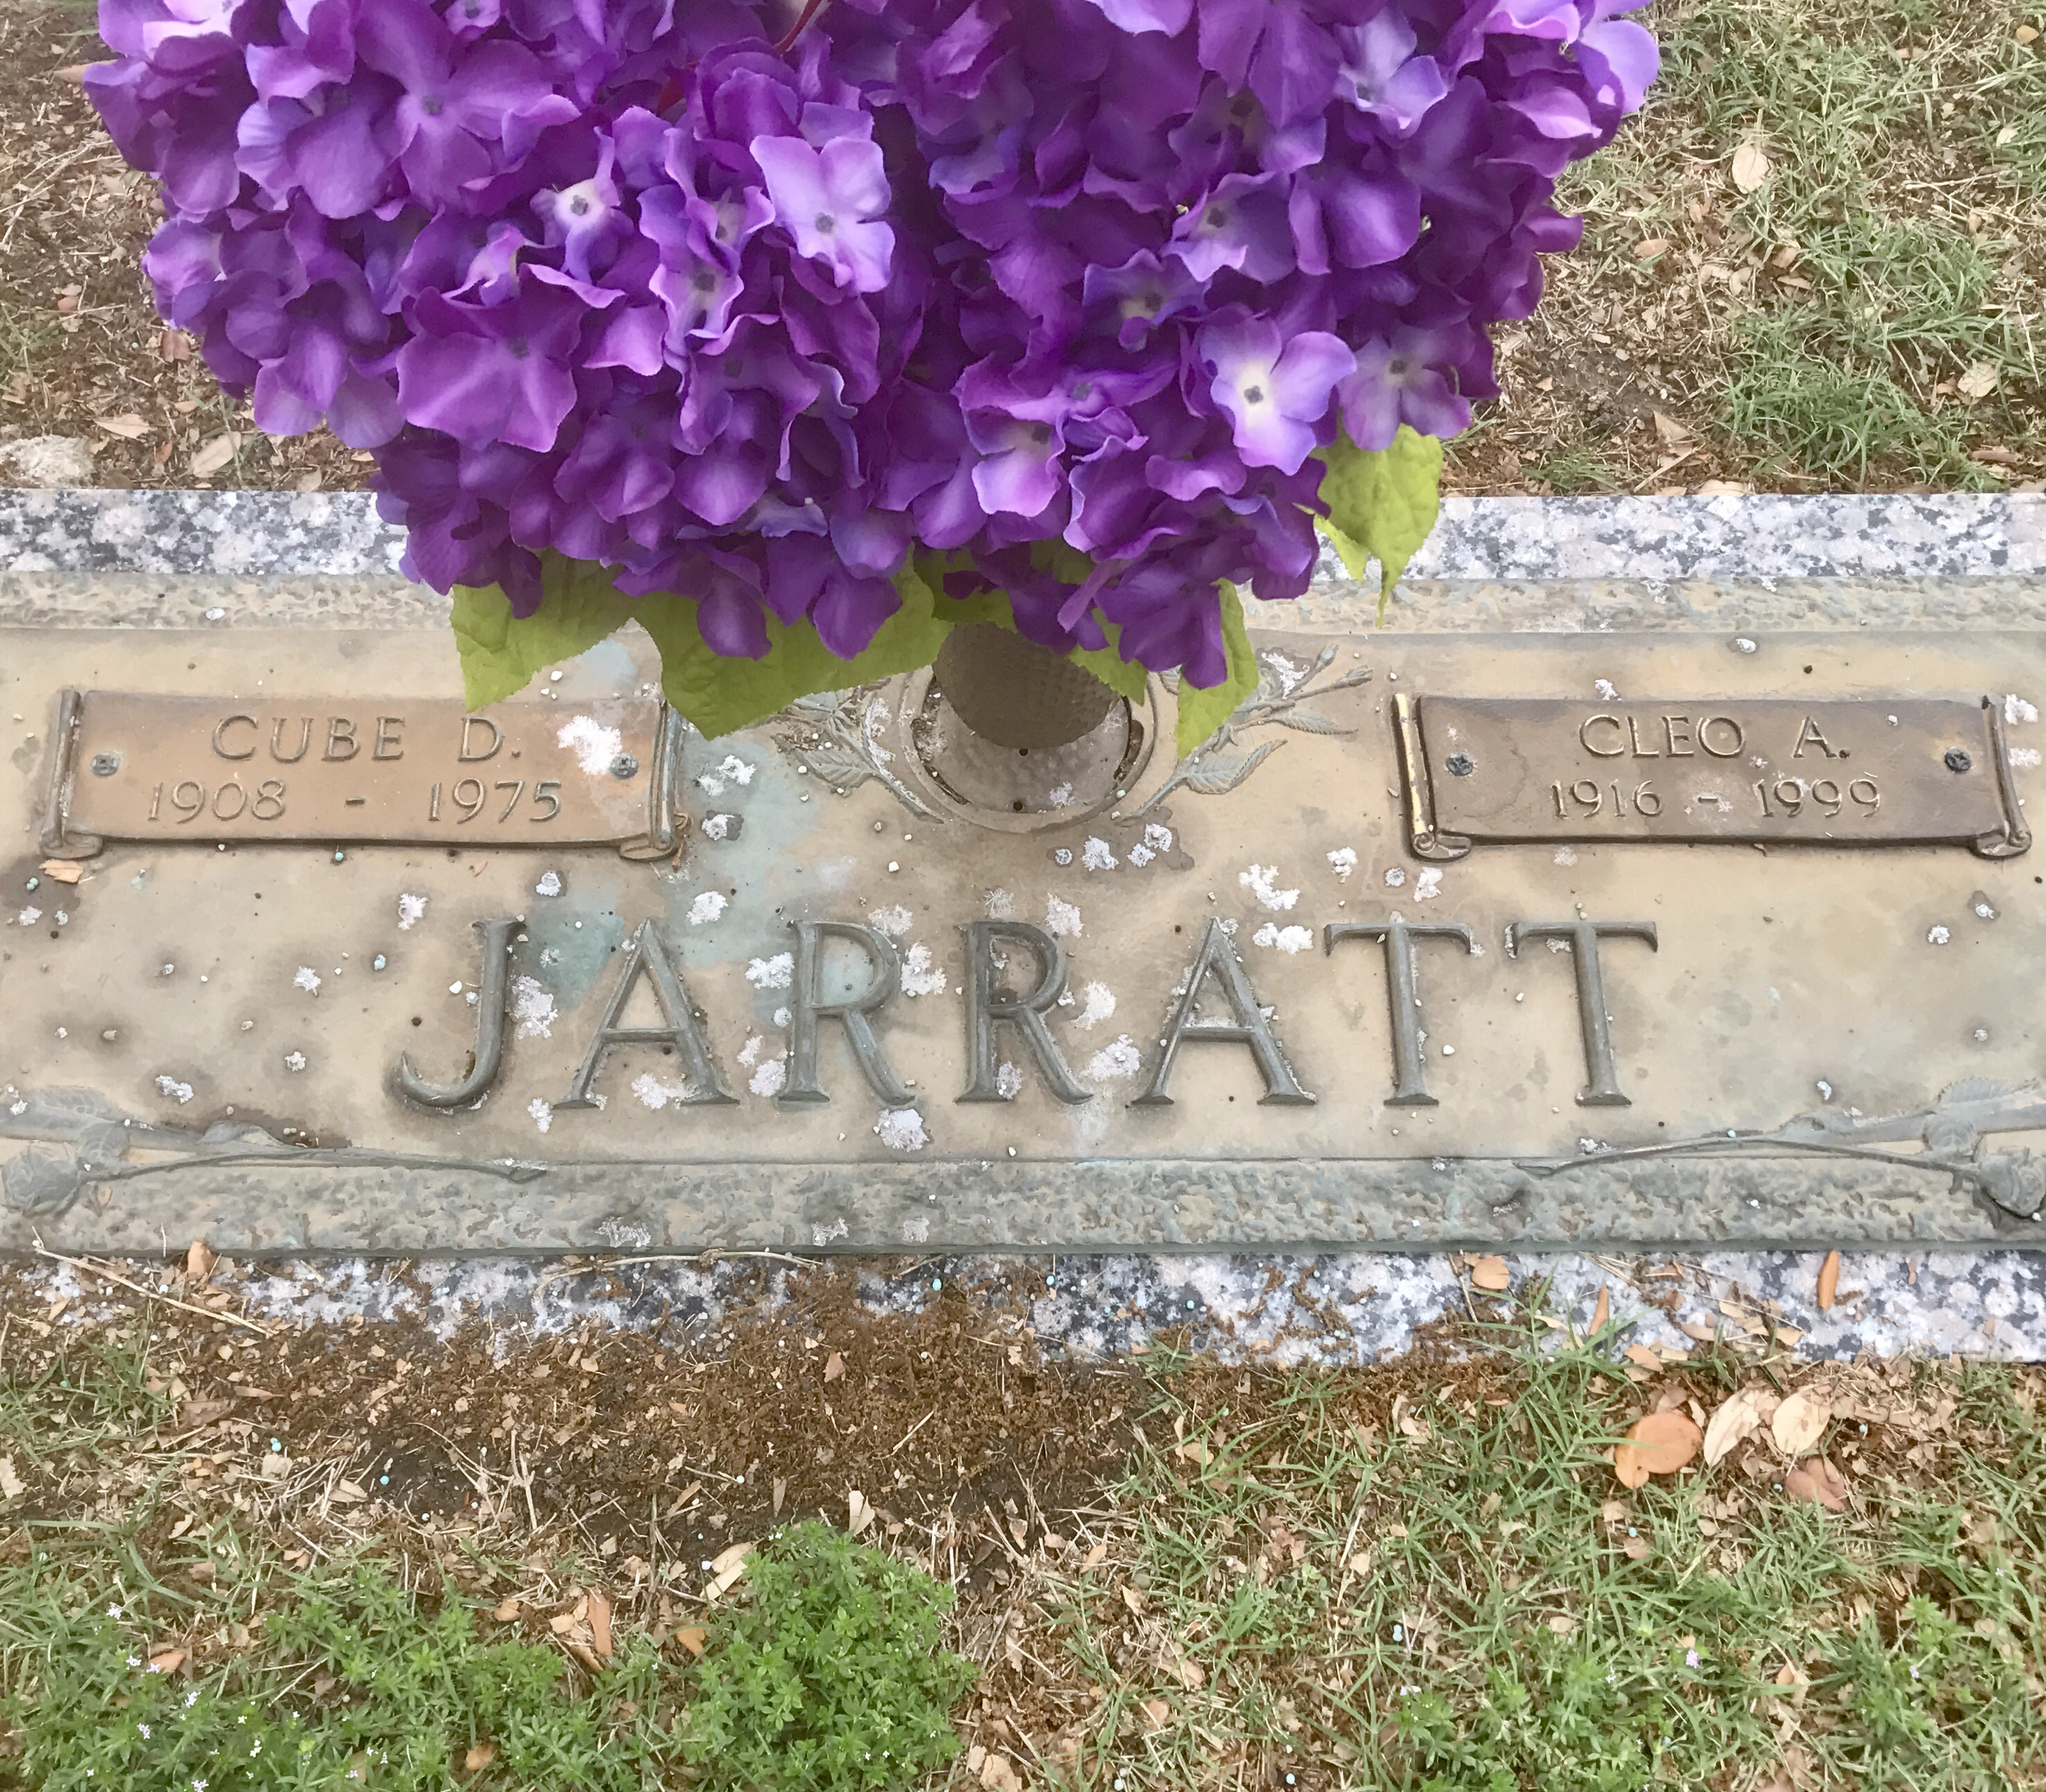 gravestones\JARRATT Cube